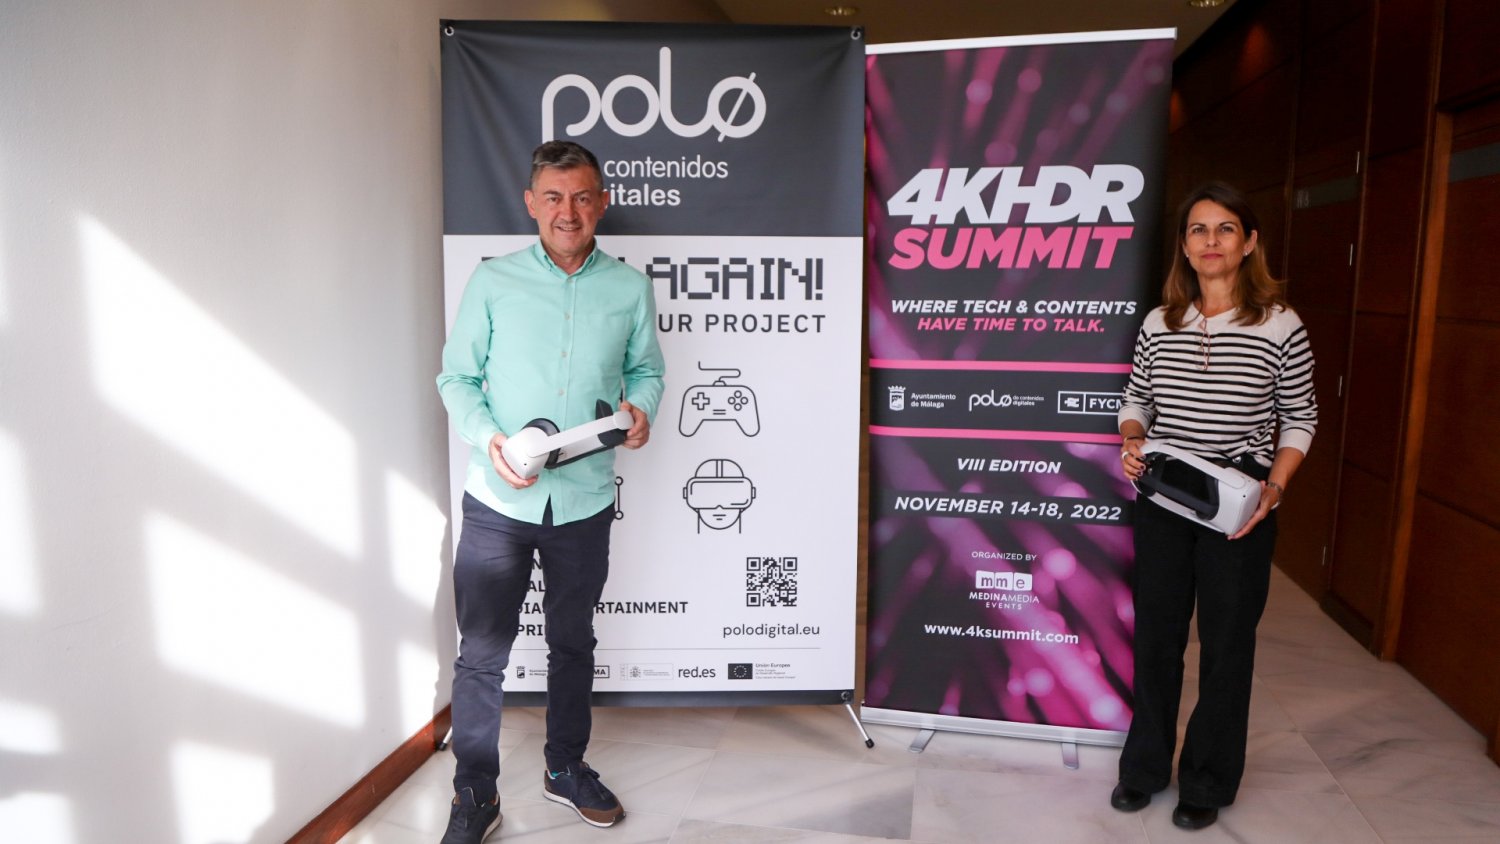 Málaga recibe hasta 50 países para la 4K HDR Summit 22